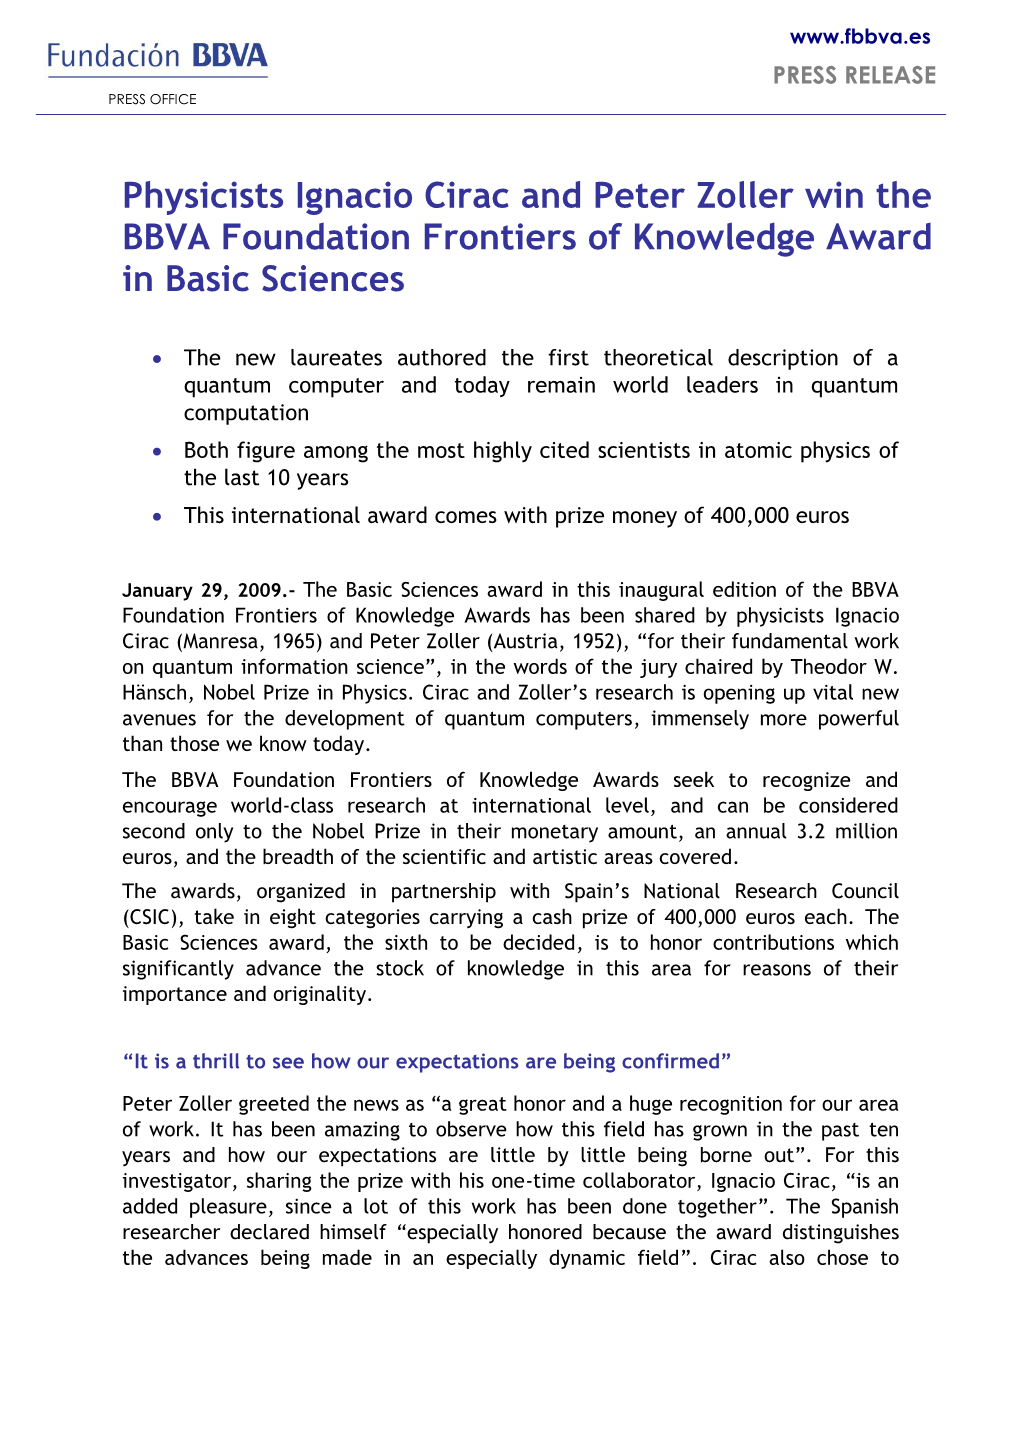 Physicists Peter Zoller and Ignacio Cirac Win the BBVA Foundation